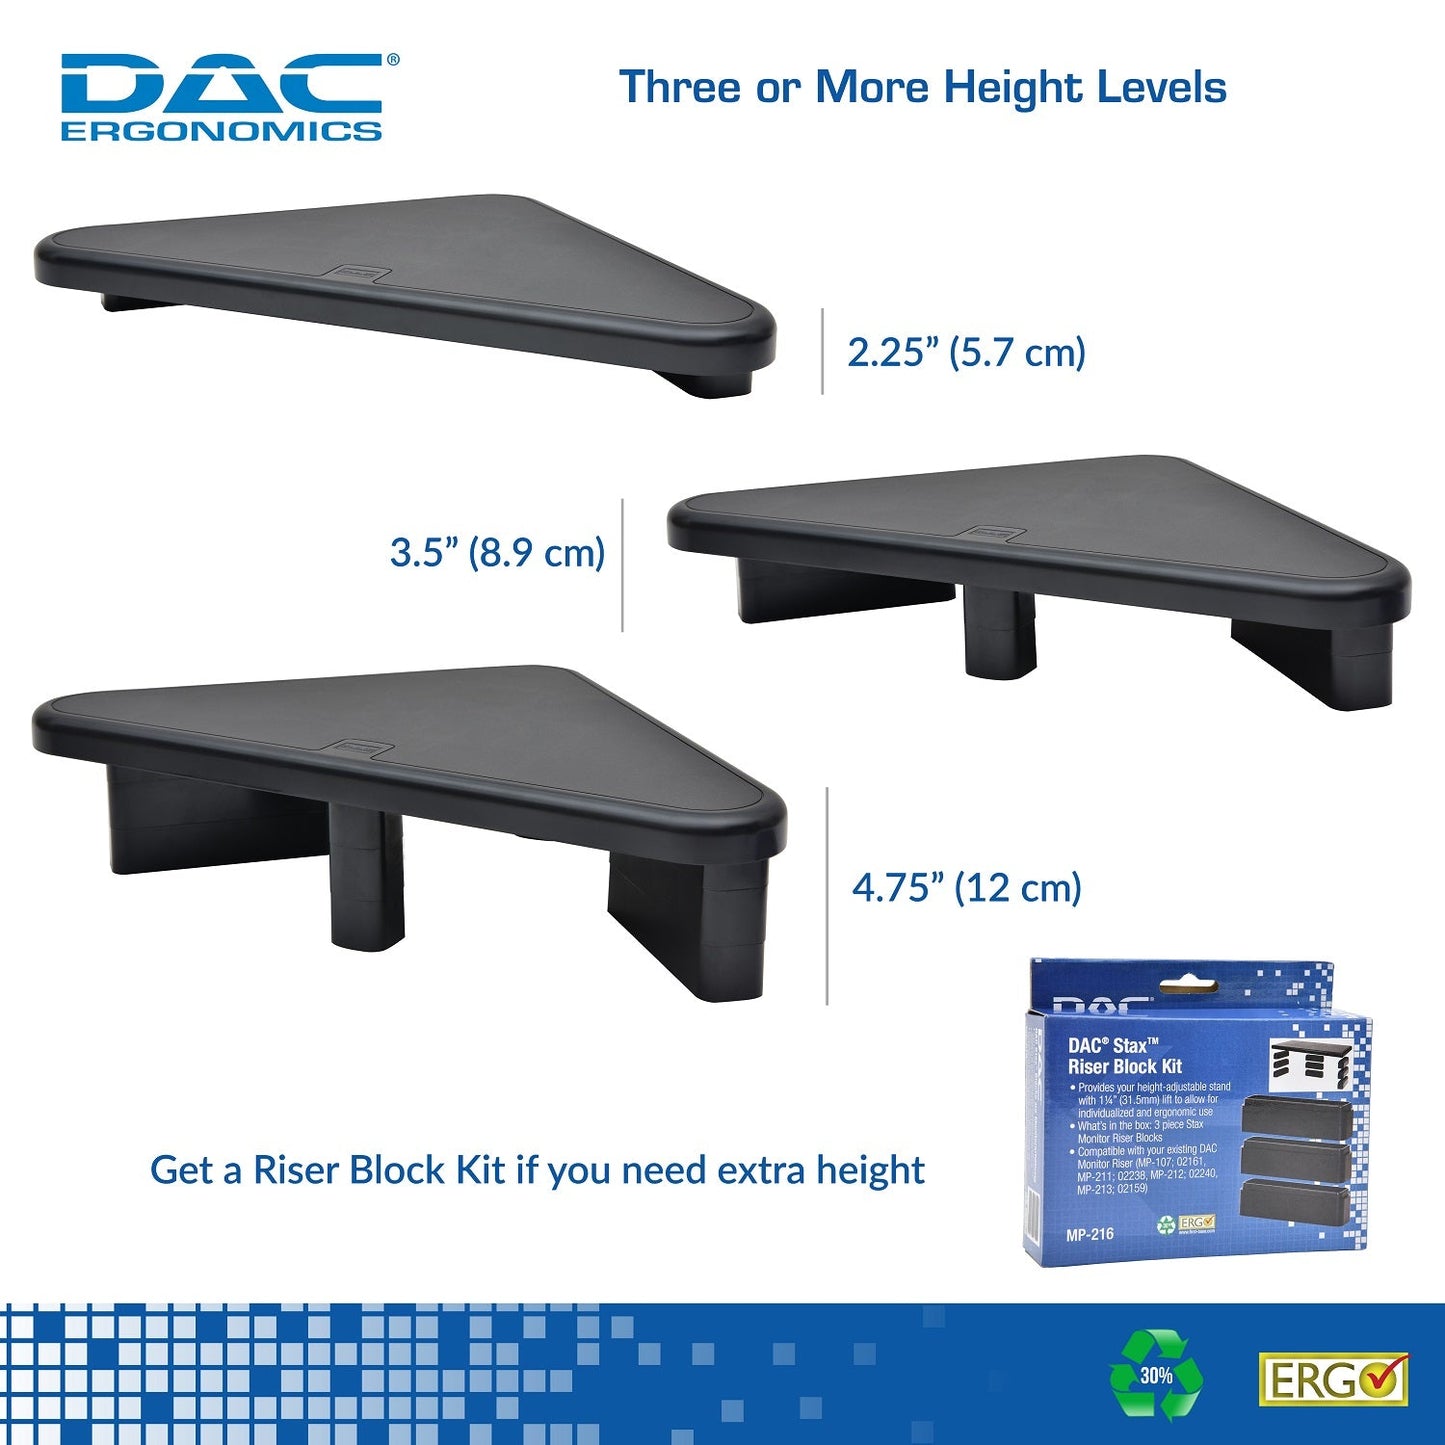 DAC® Stax MP-197 Height Adjustable Corner Monitor Riser, Black